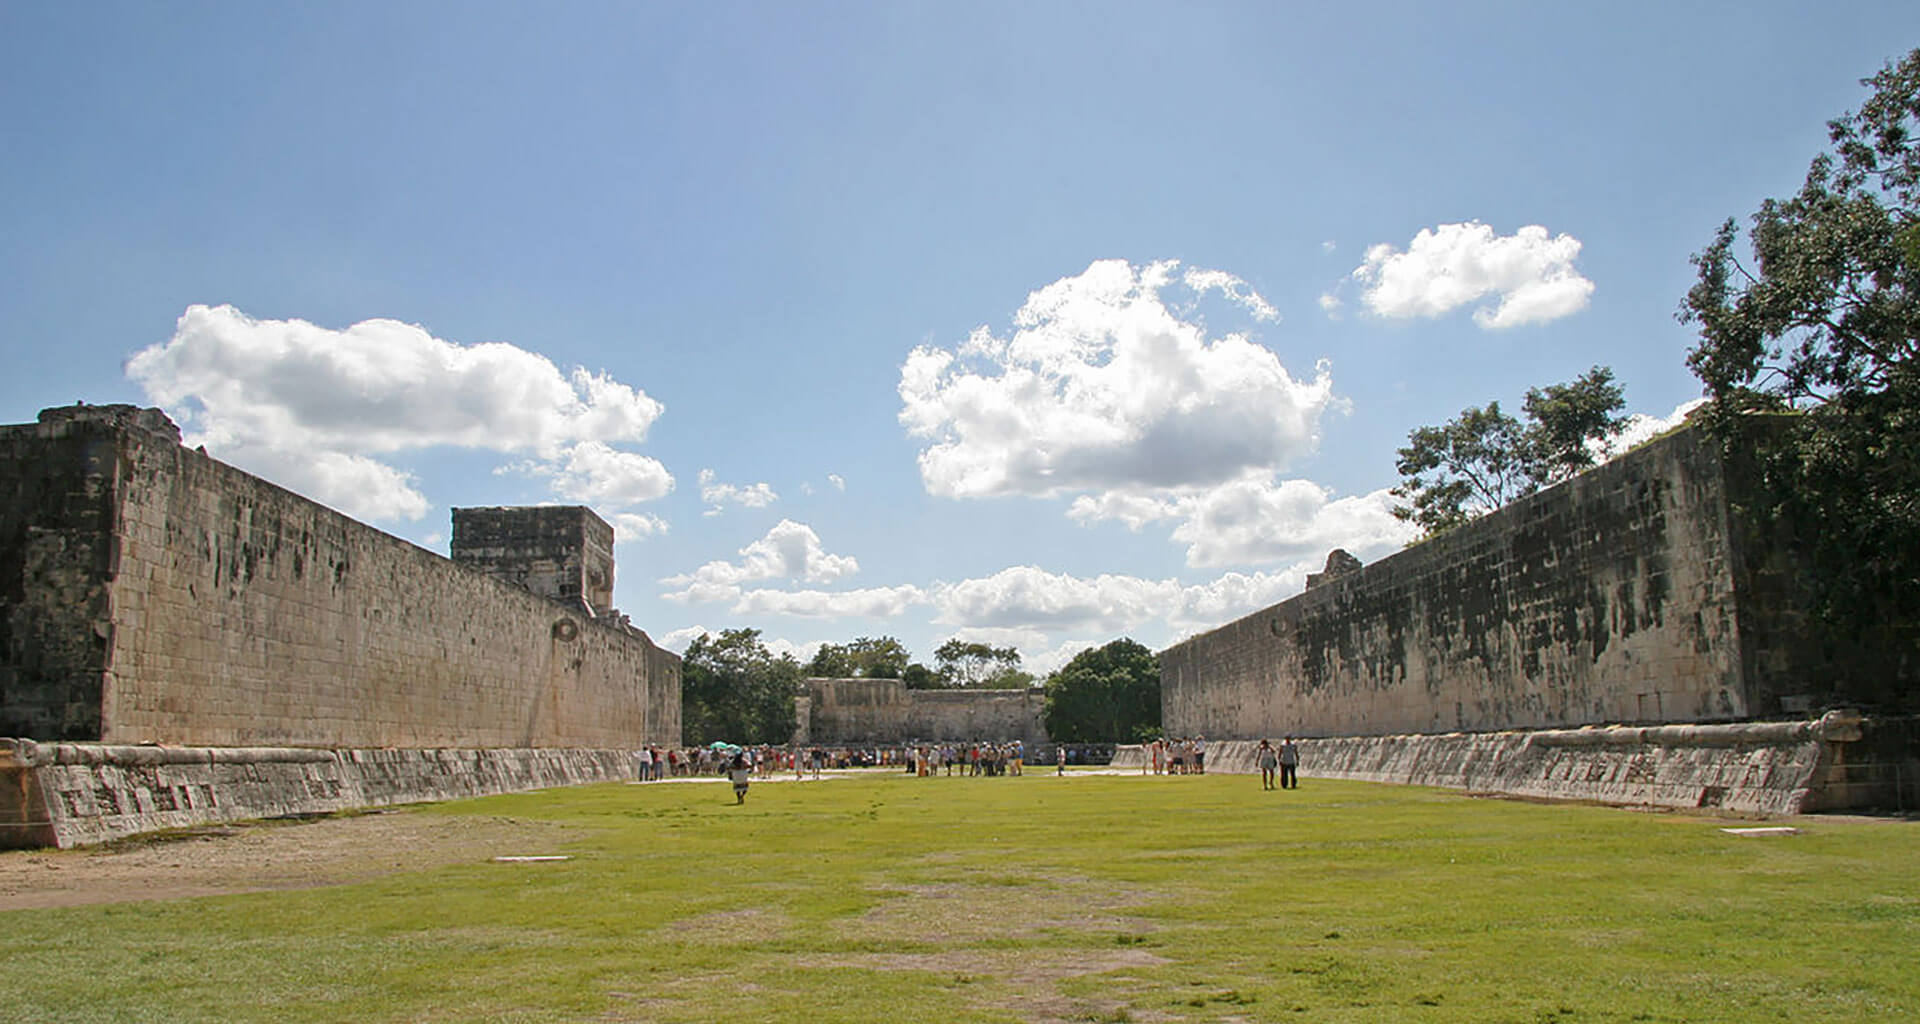 The Mayan Ball Game